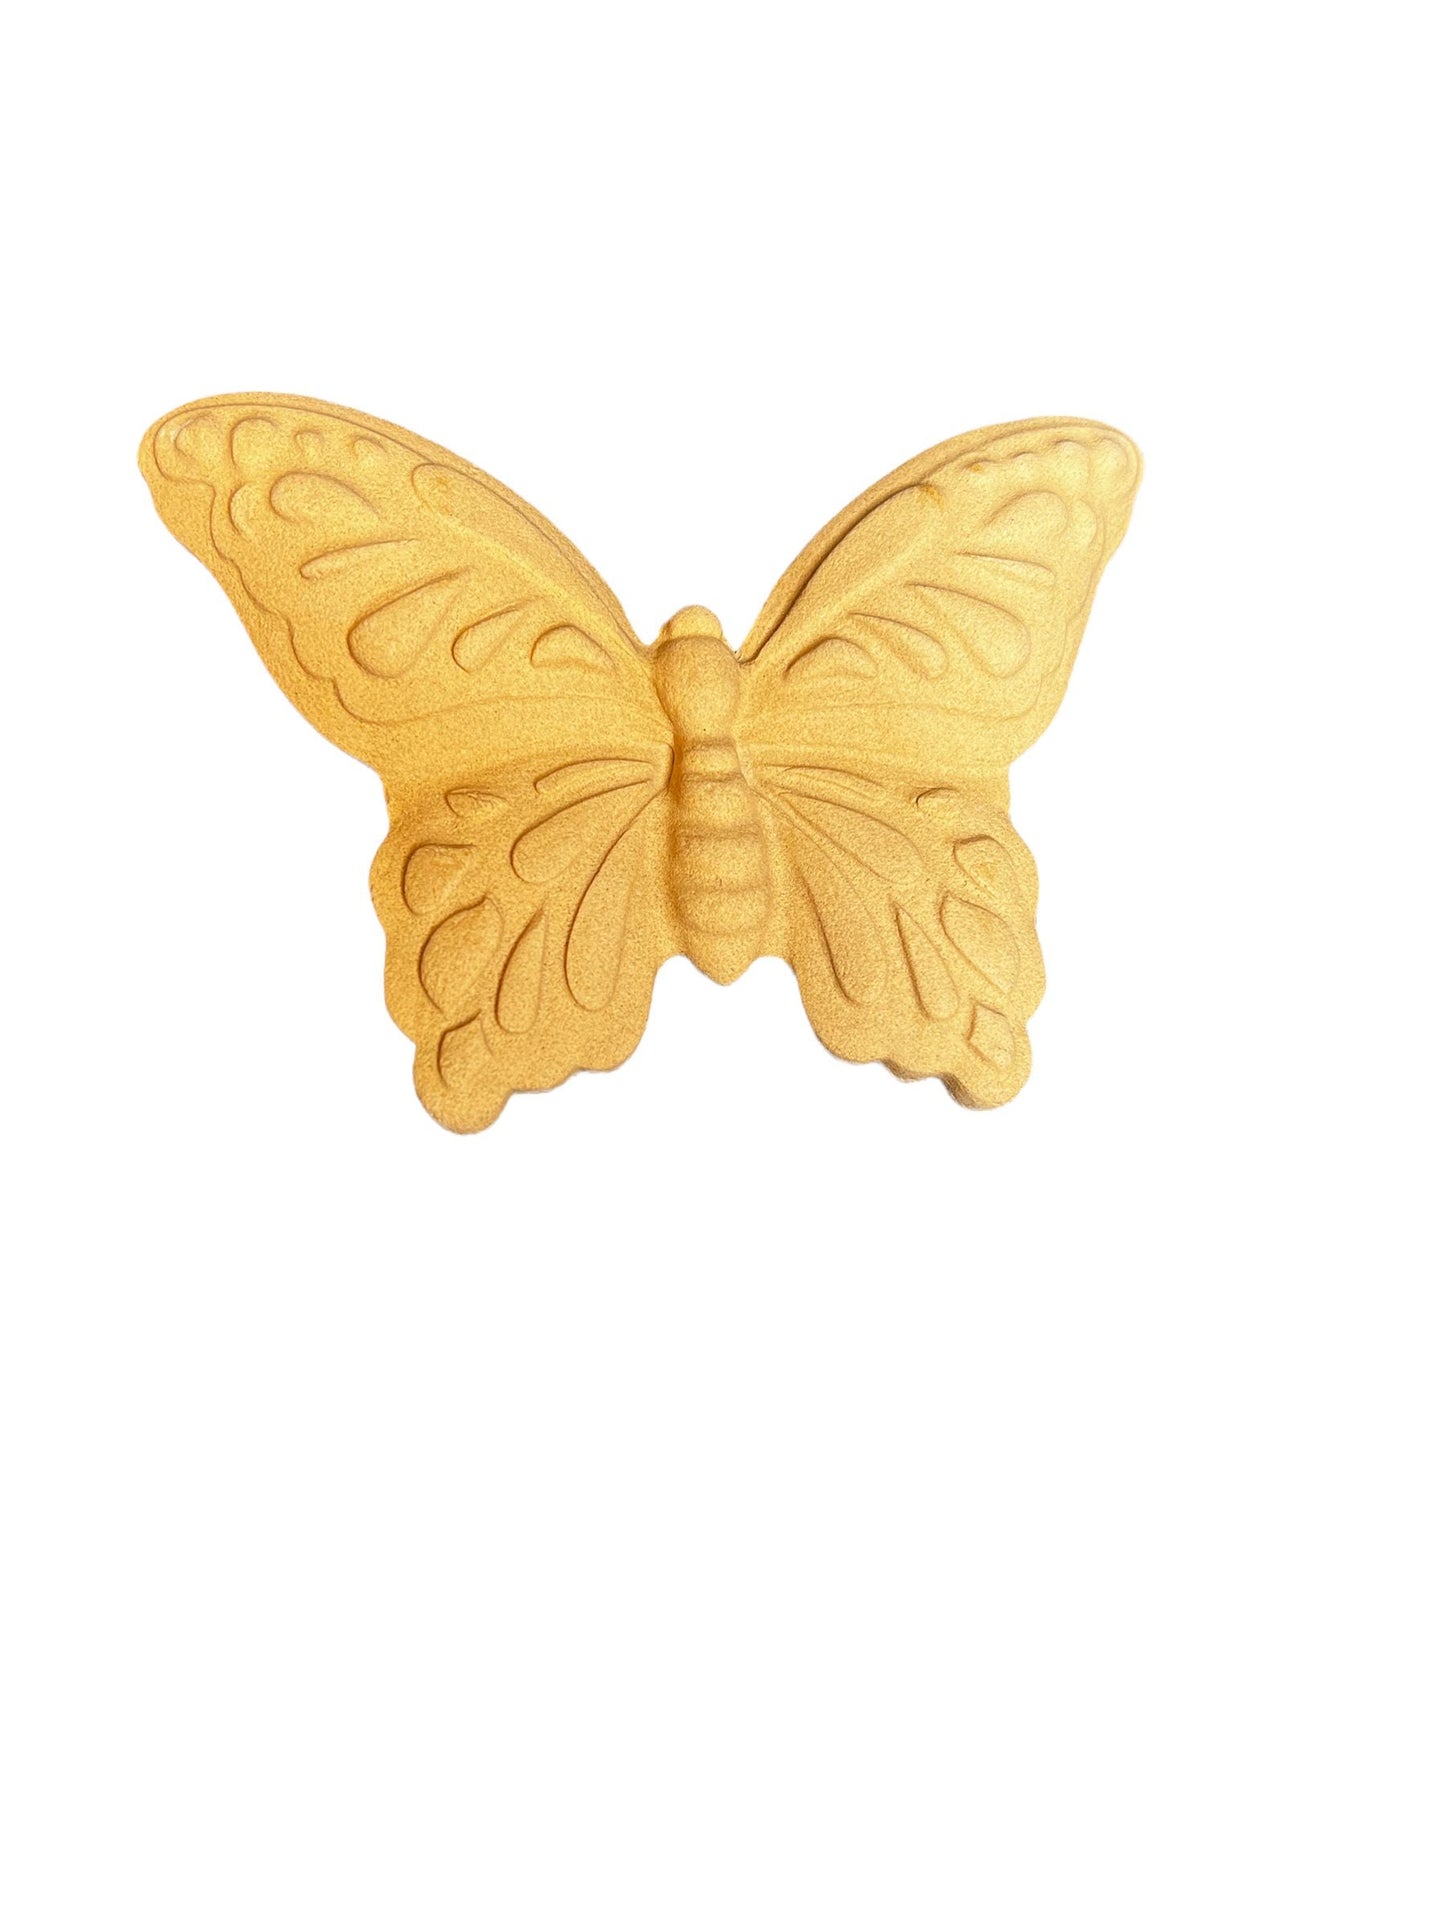 Flexible Pliable Embellishment IFW 1094 Butterfly